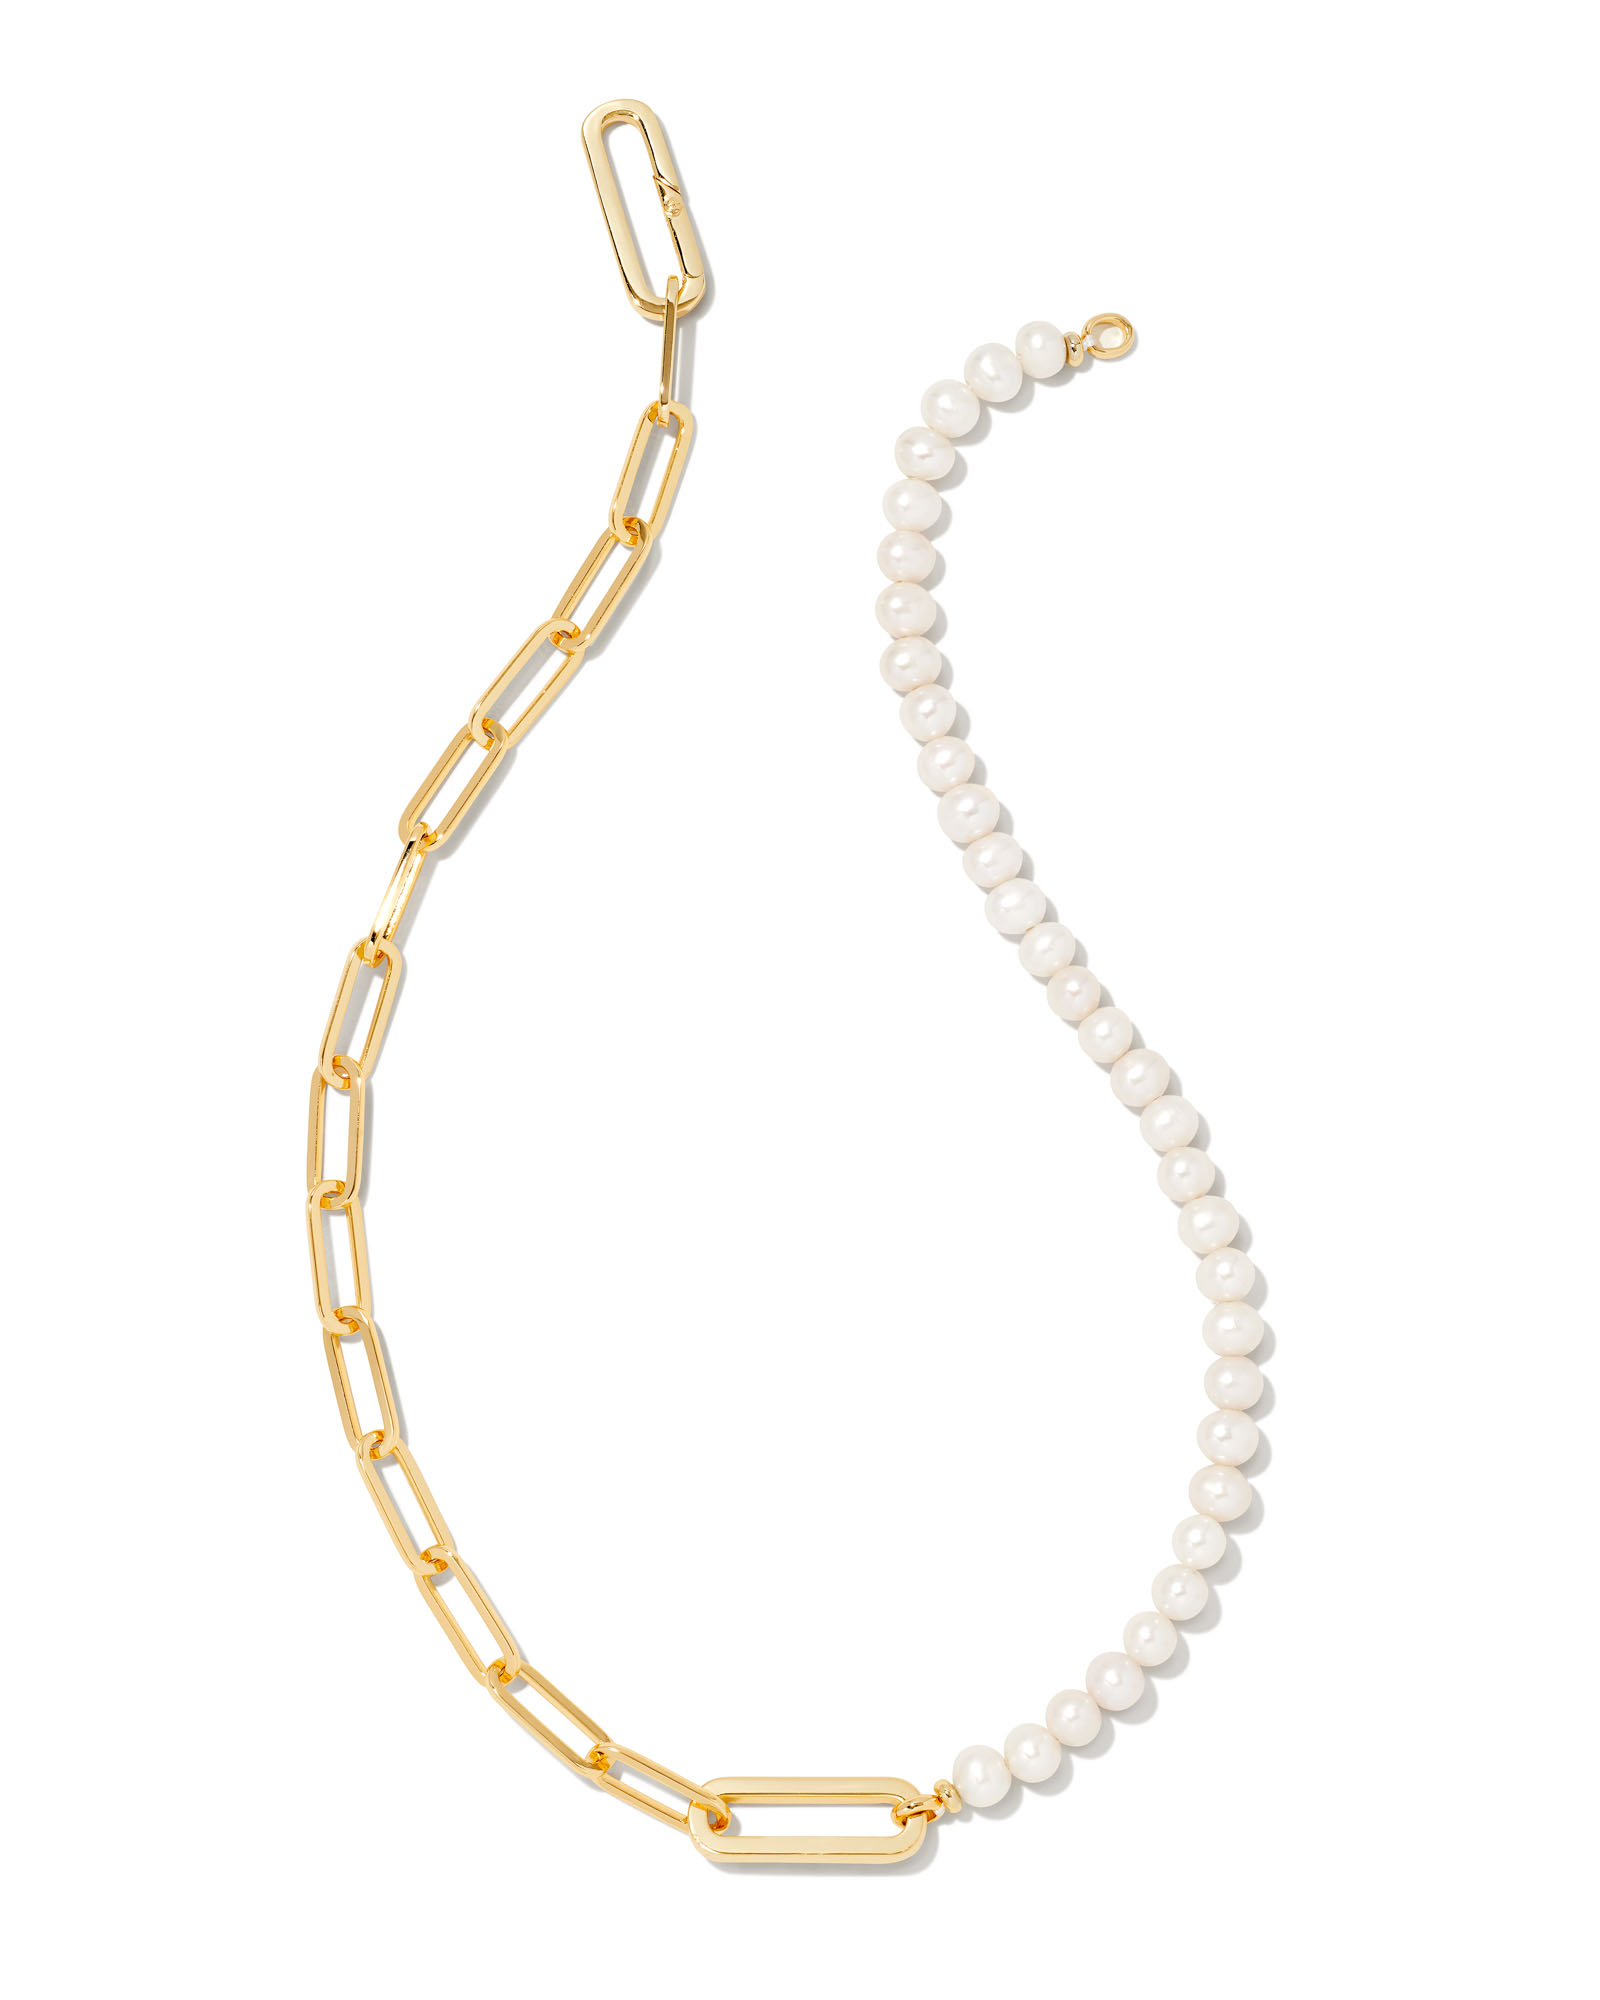 Ashton Gold Half Chain Necklace in White Pearl | Kendra Scott